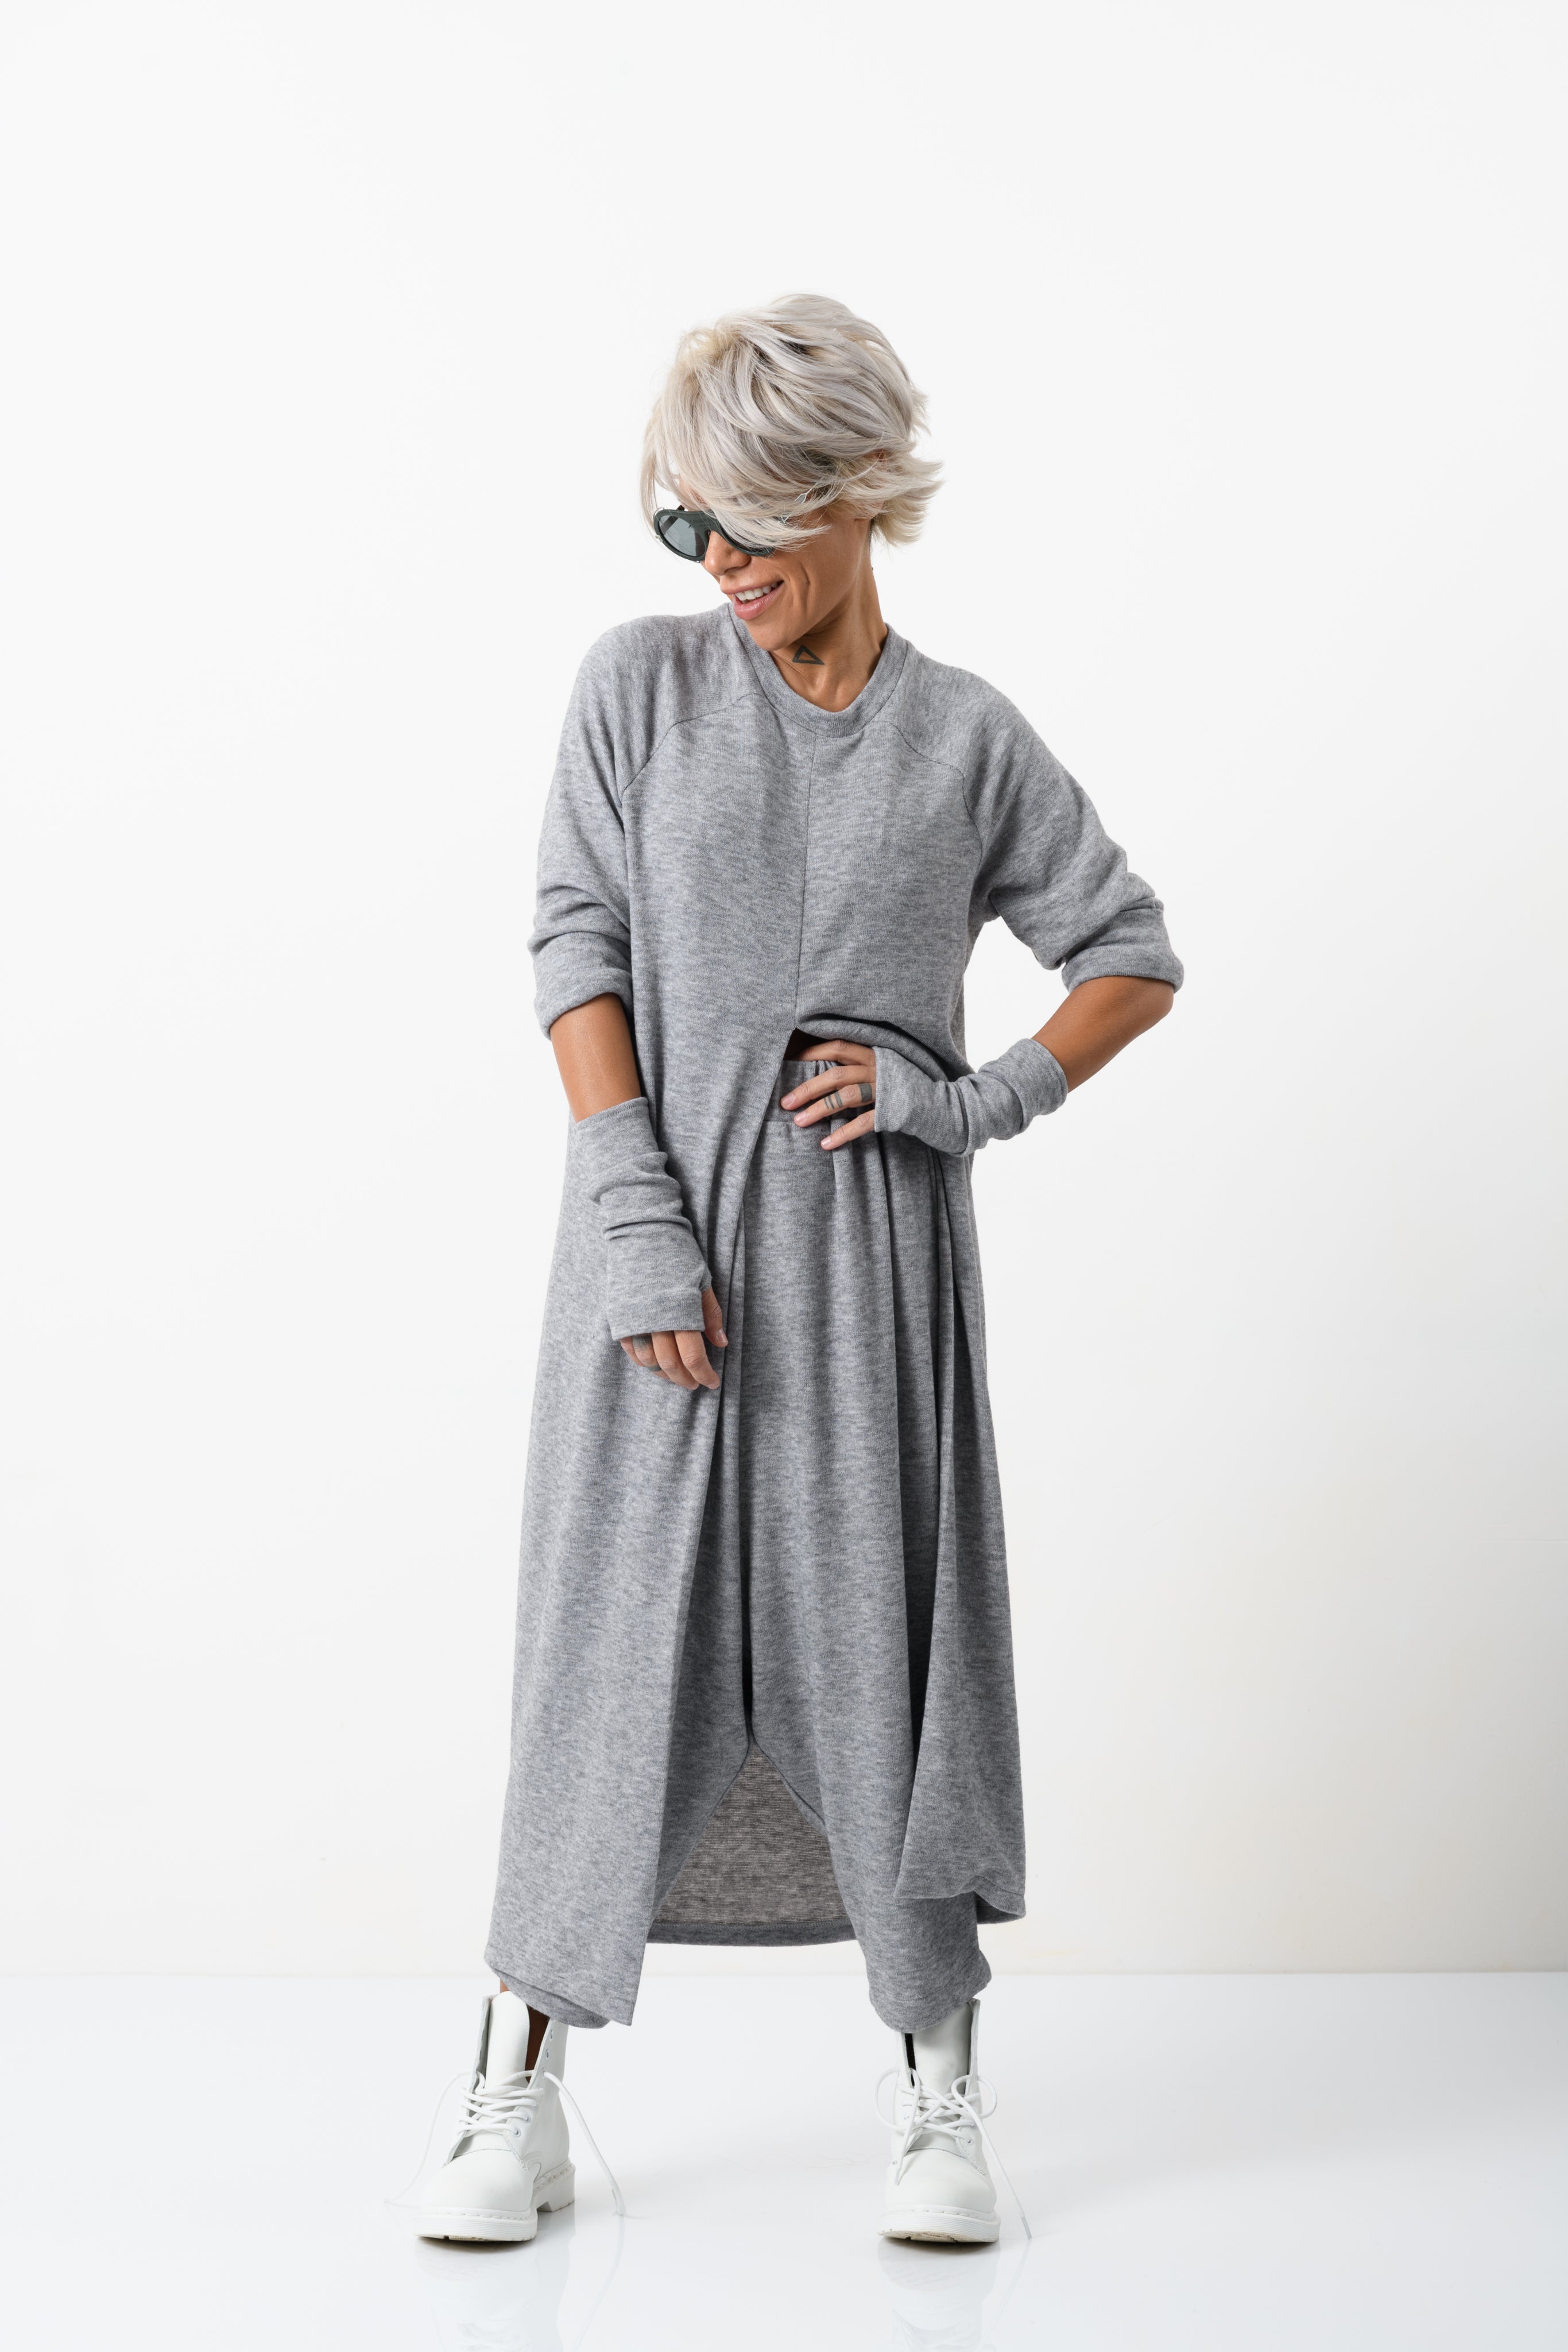 Three Pieces Grey Woman Casual Set – Clothes By Locker Room